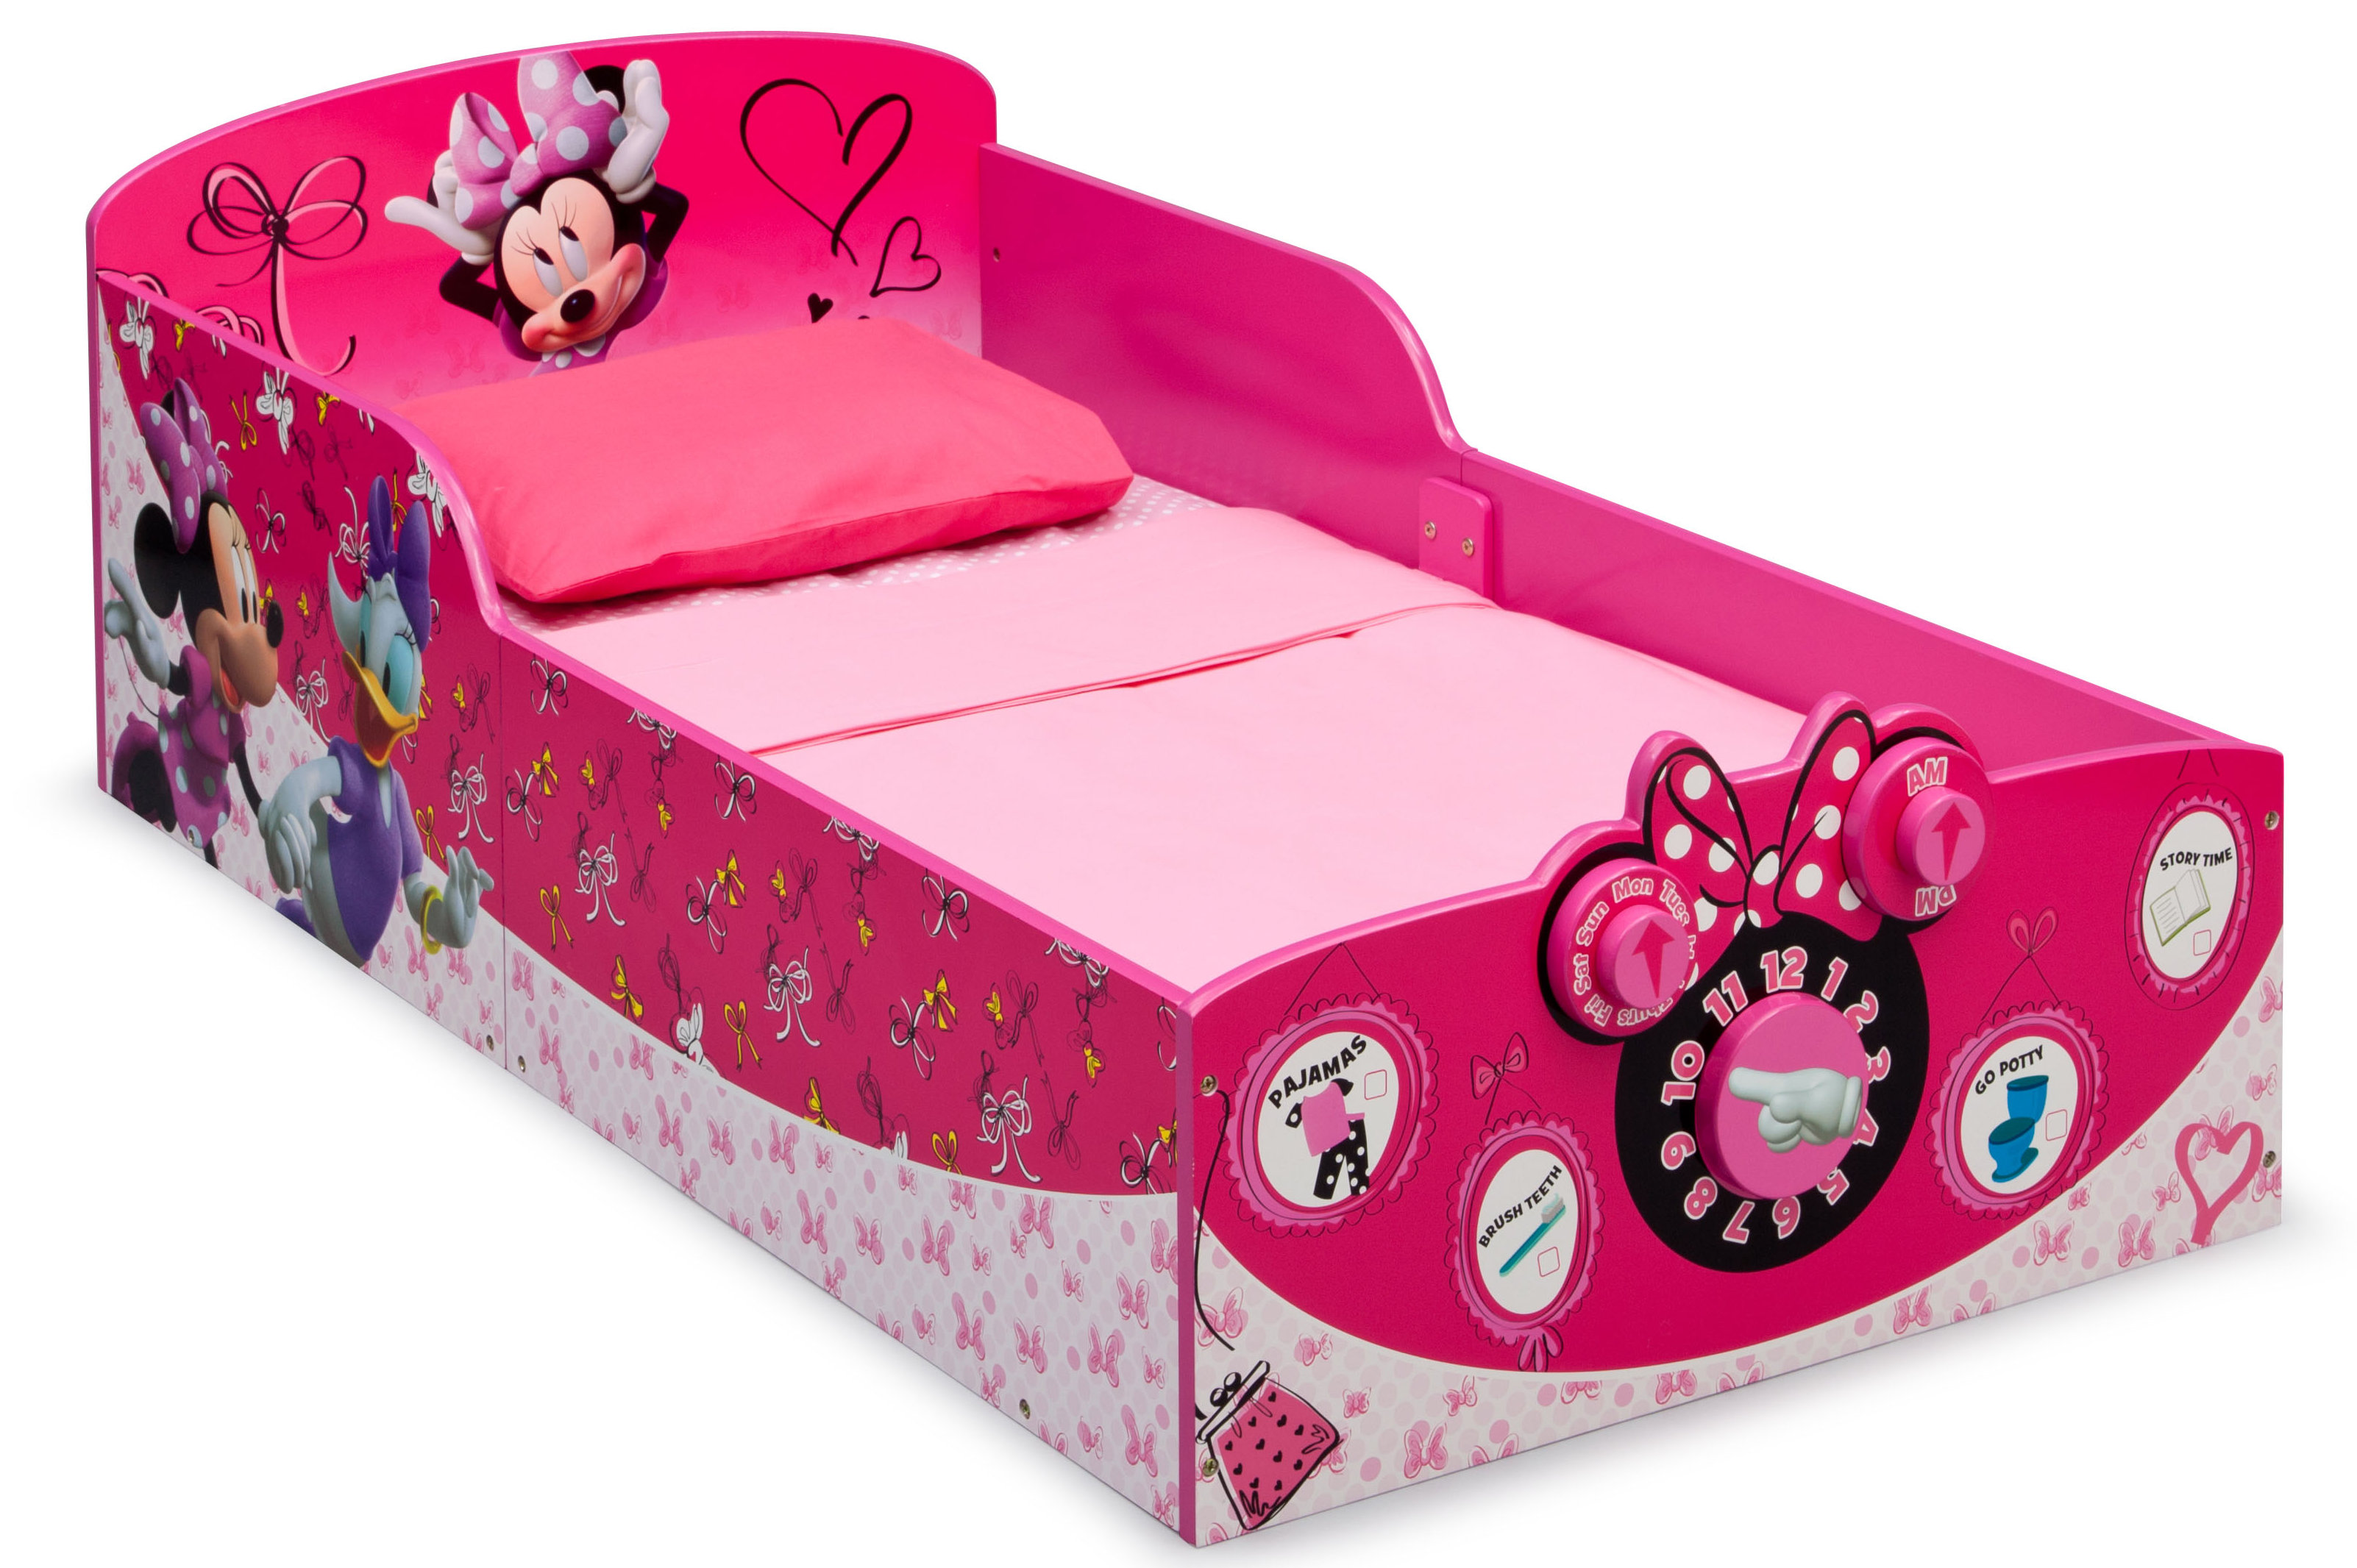 minnie mouse toddler bed mattress